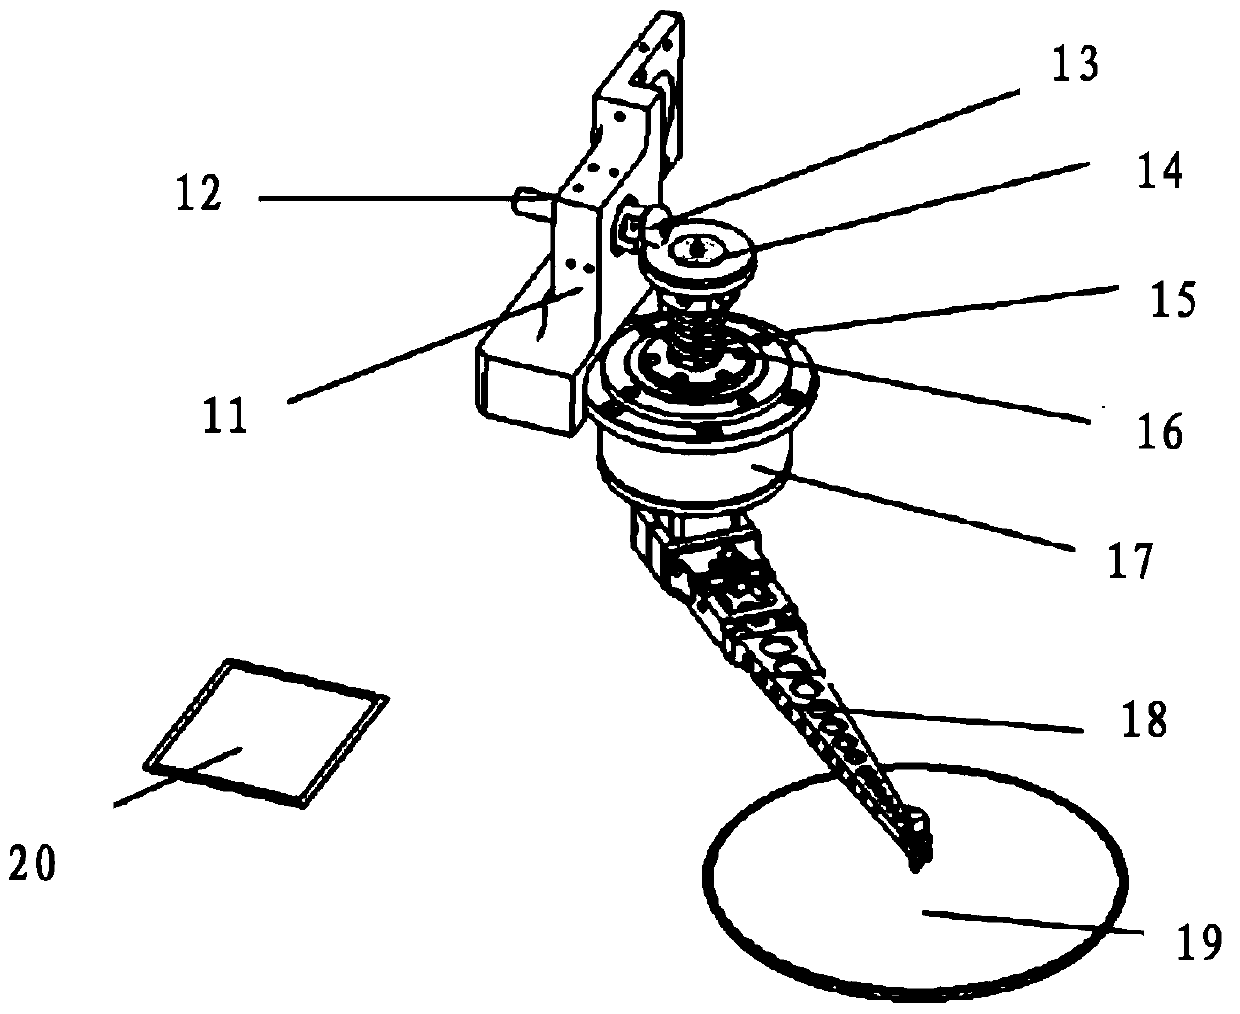 A chip feeding mechanism and chip bonder